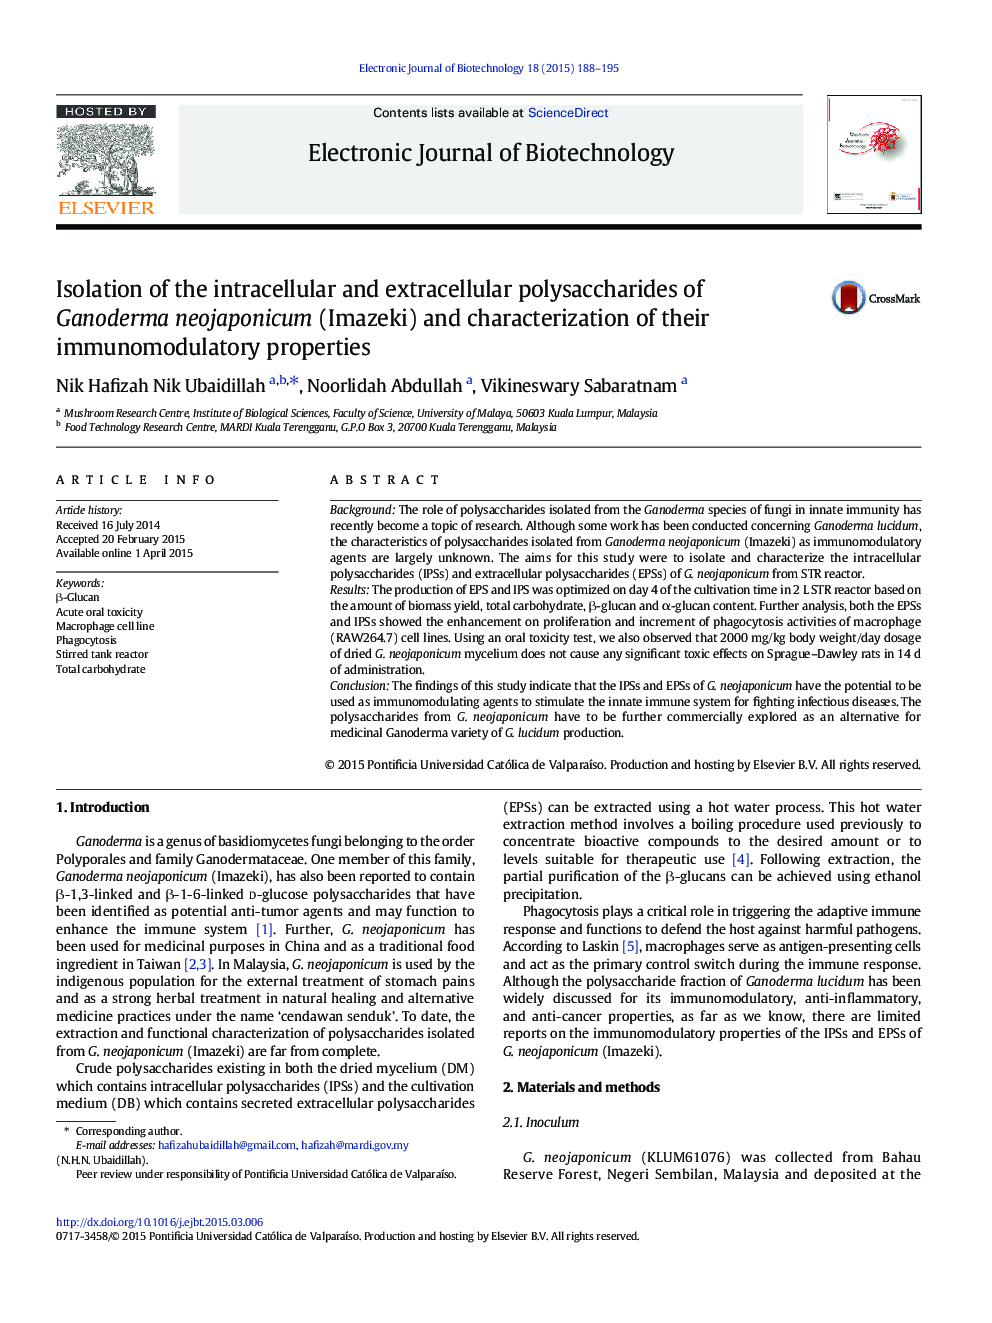 Isolation of the intracellular and extracellular polysaccharides of Ganoderma neojaponicum (Imazeki) and characterization of their immunomodulatory properties 